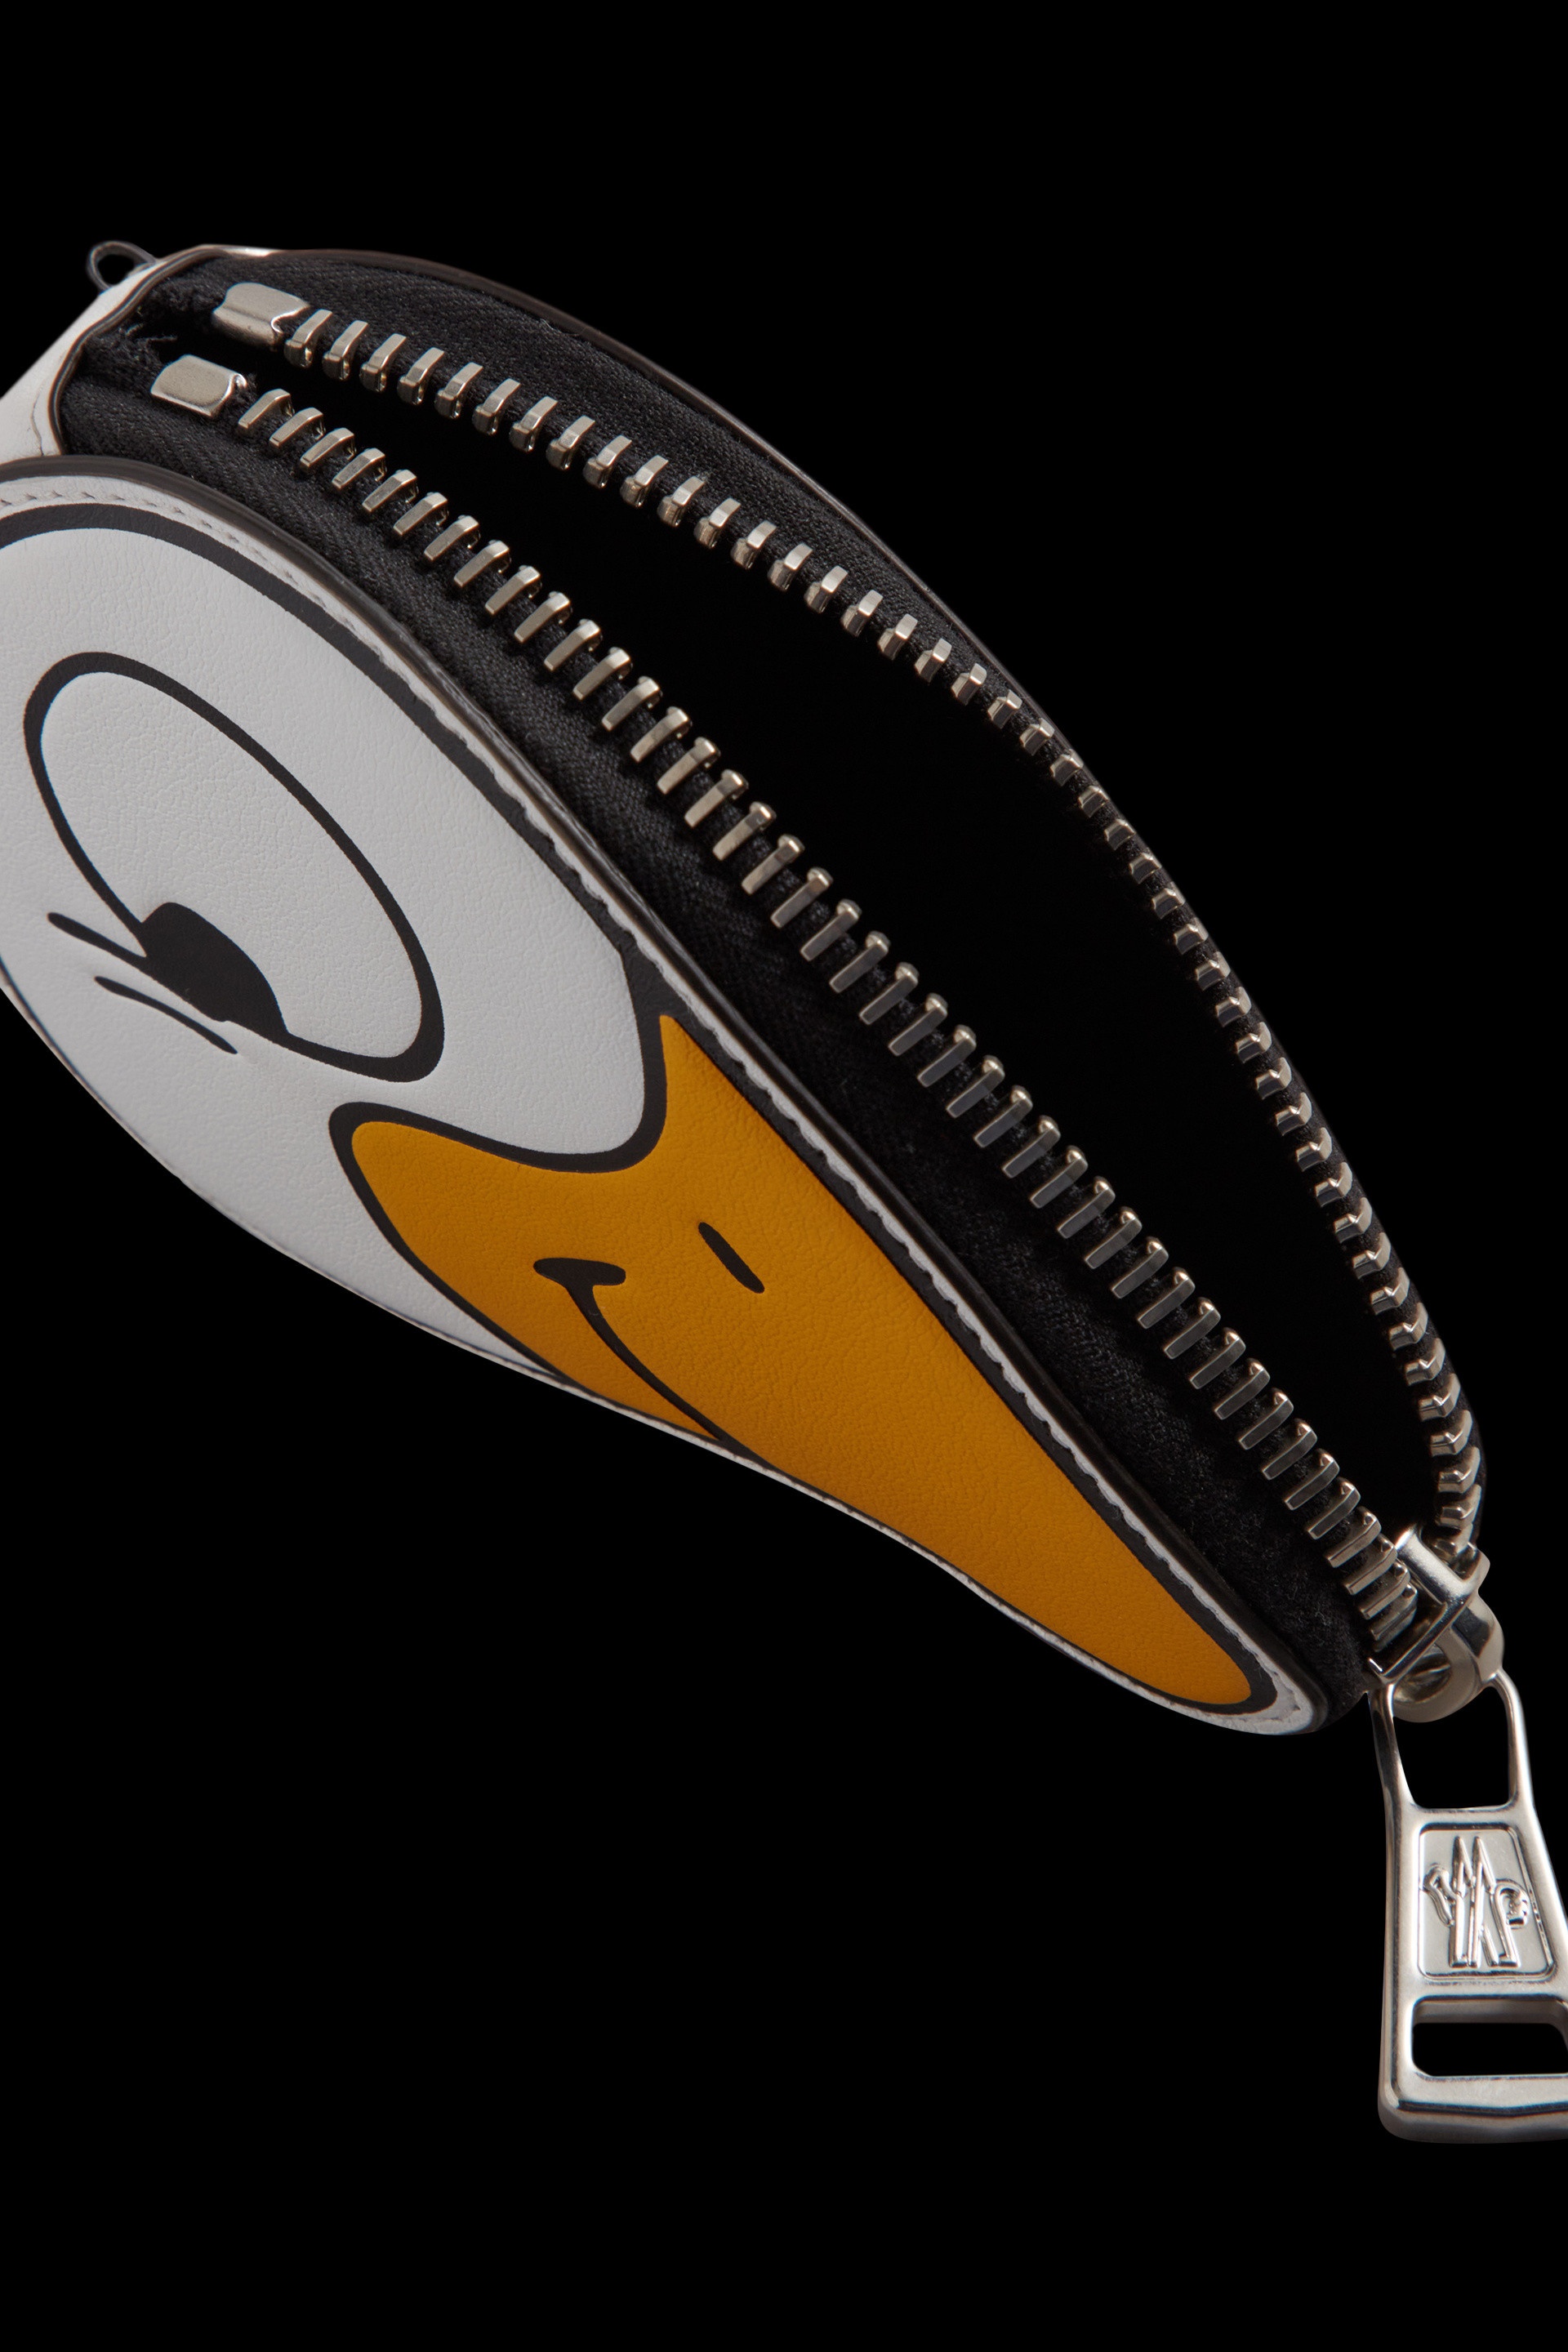 Duck-Shaped Key Holder - 5